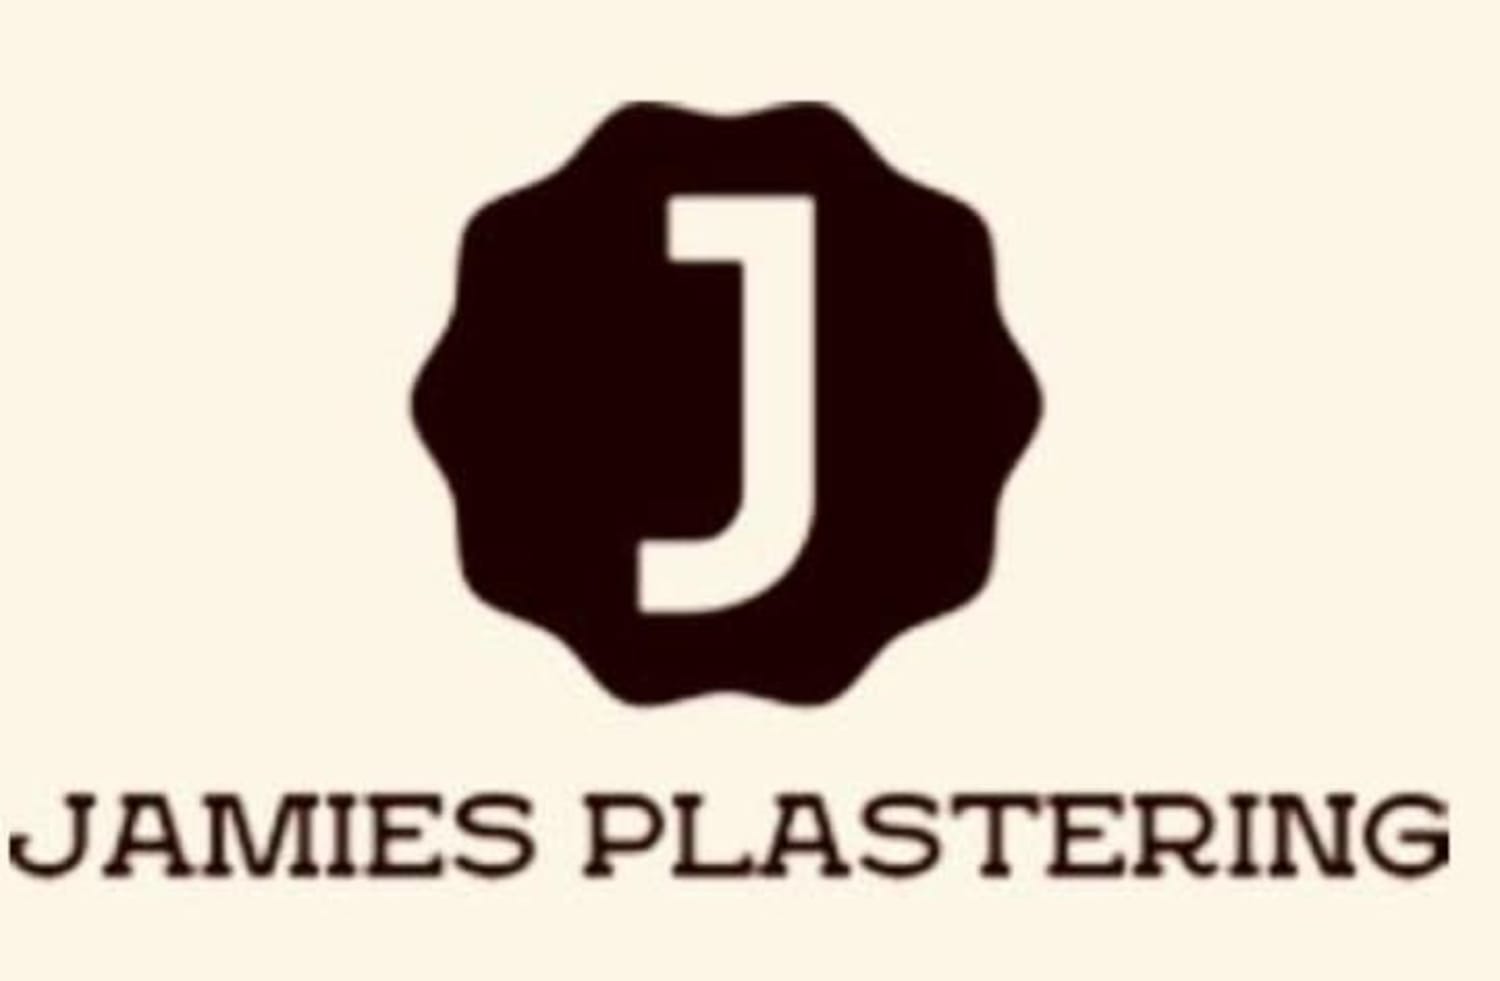 Jamie's Plastering